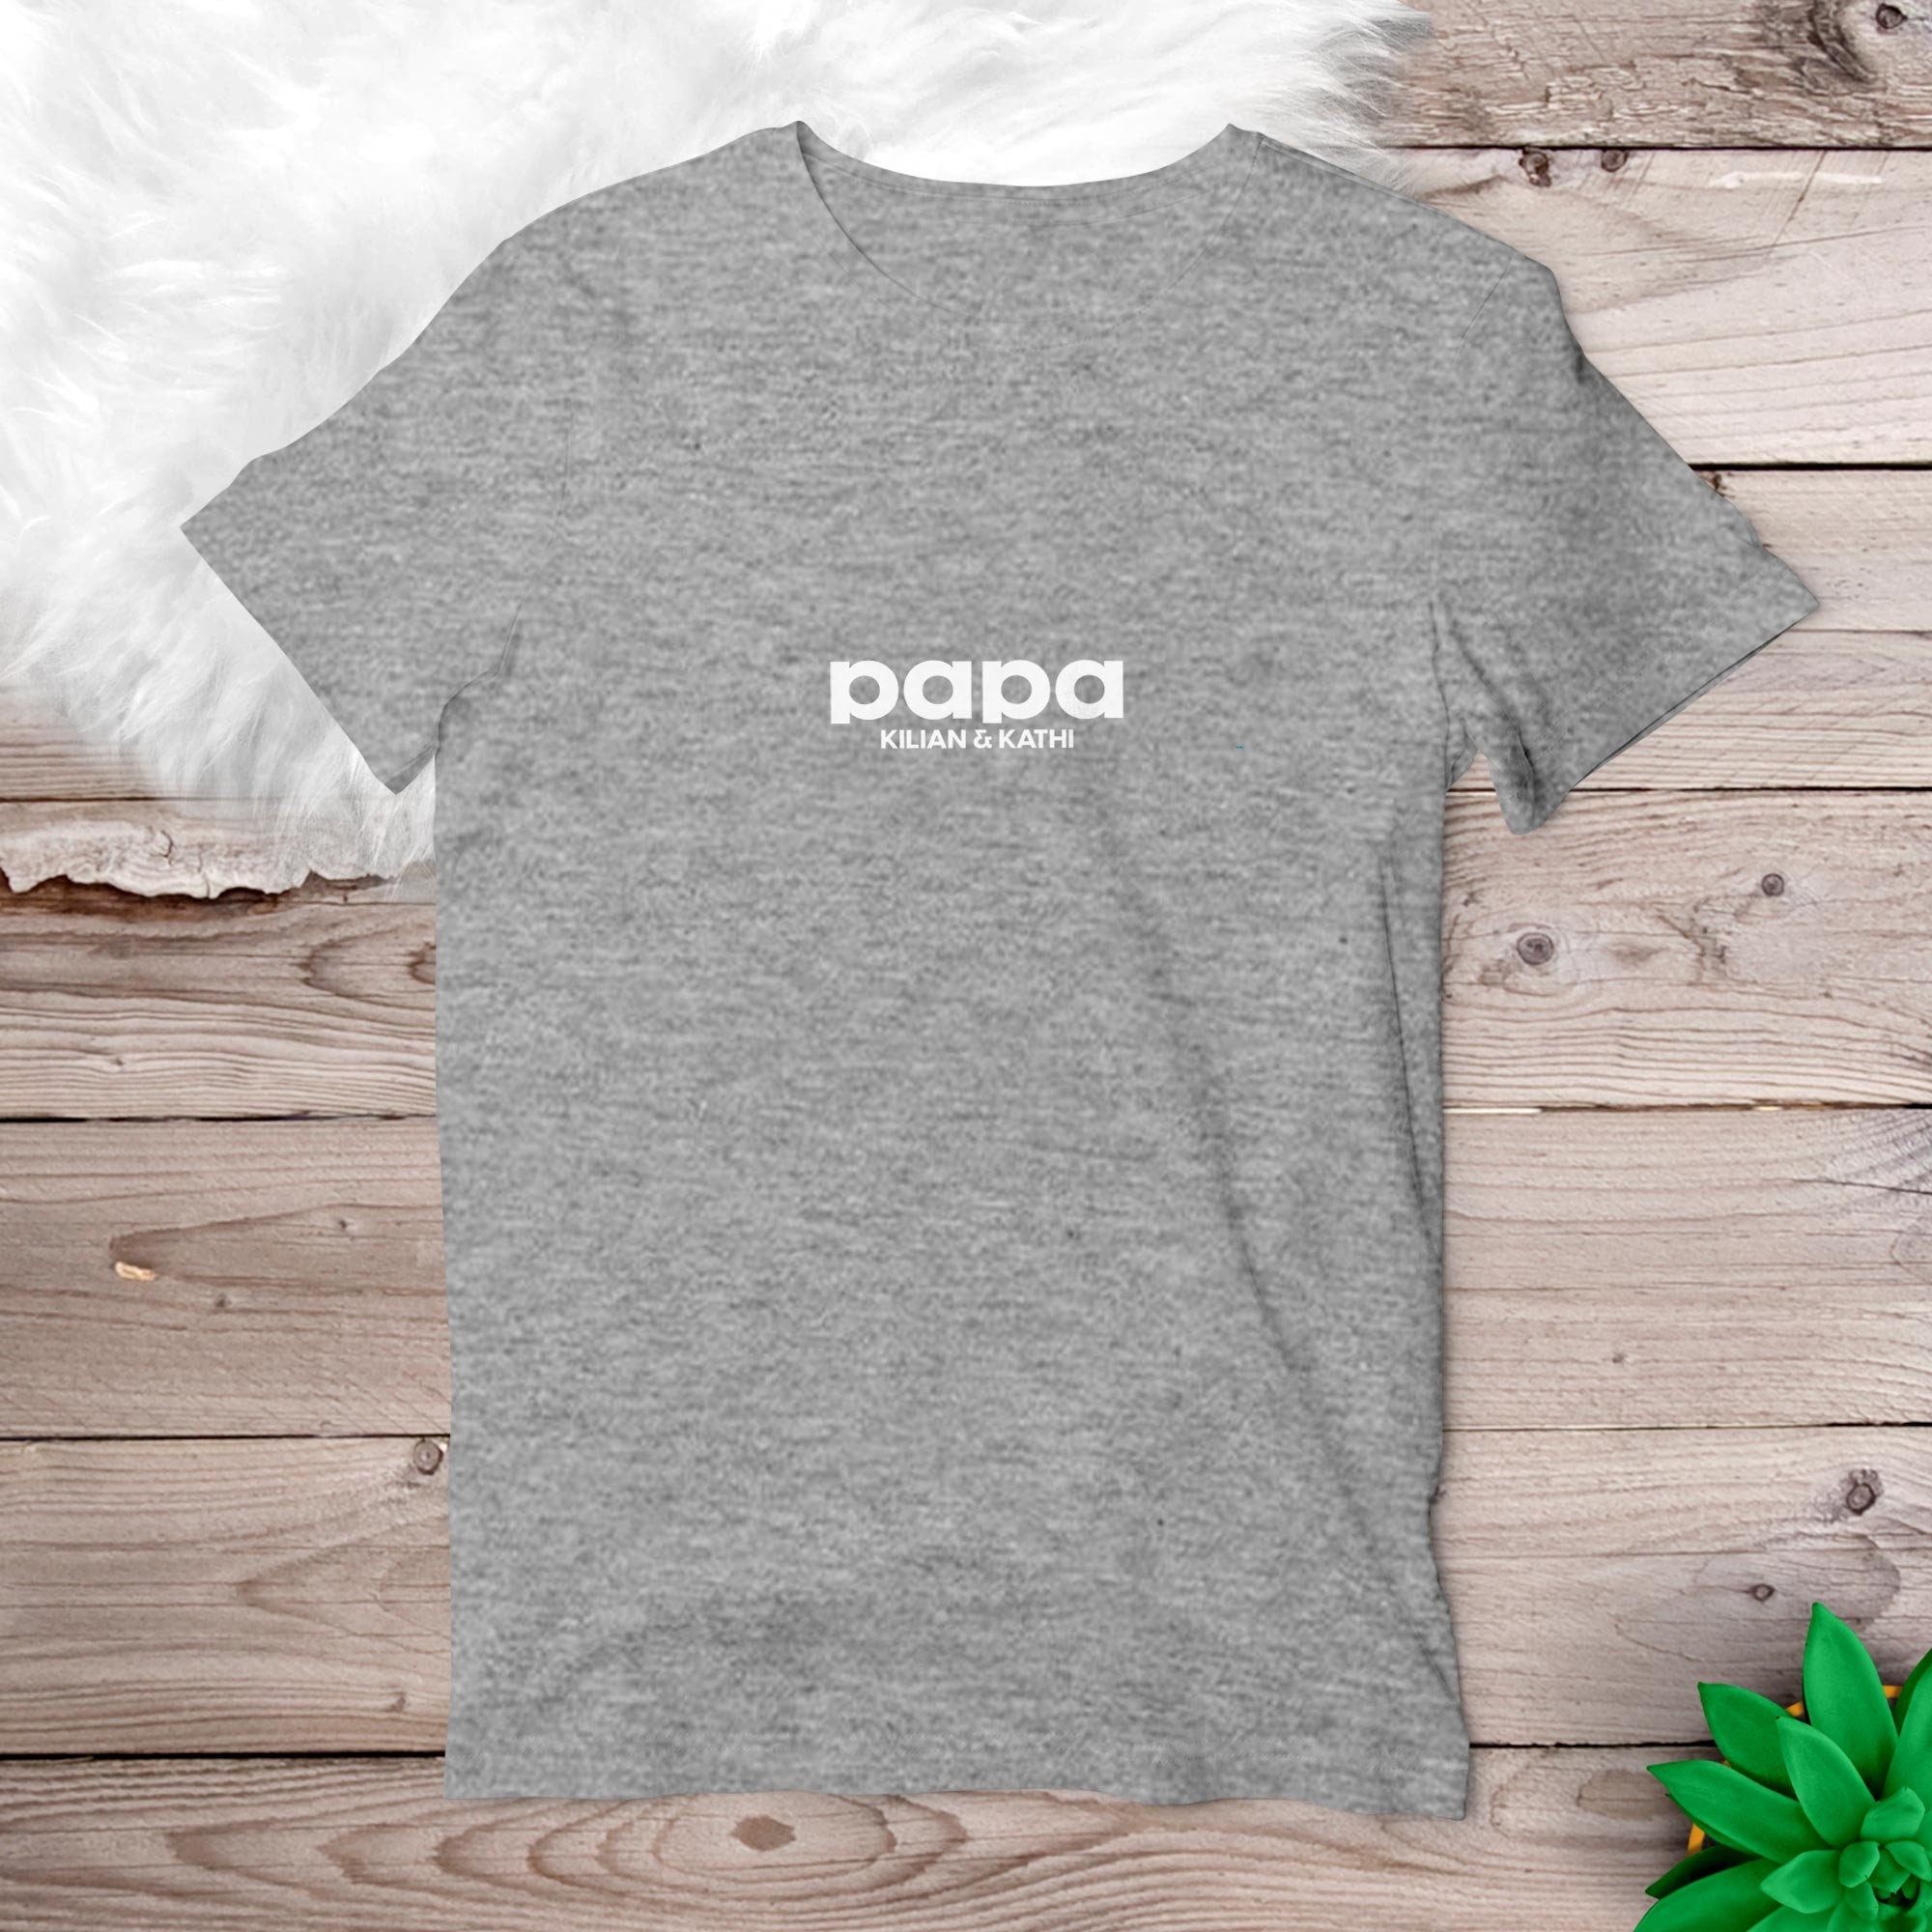 Papa T-Shirt simple grau, personalisiert mit Namen